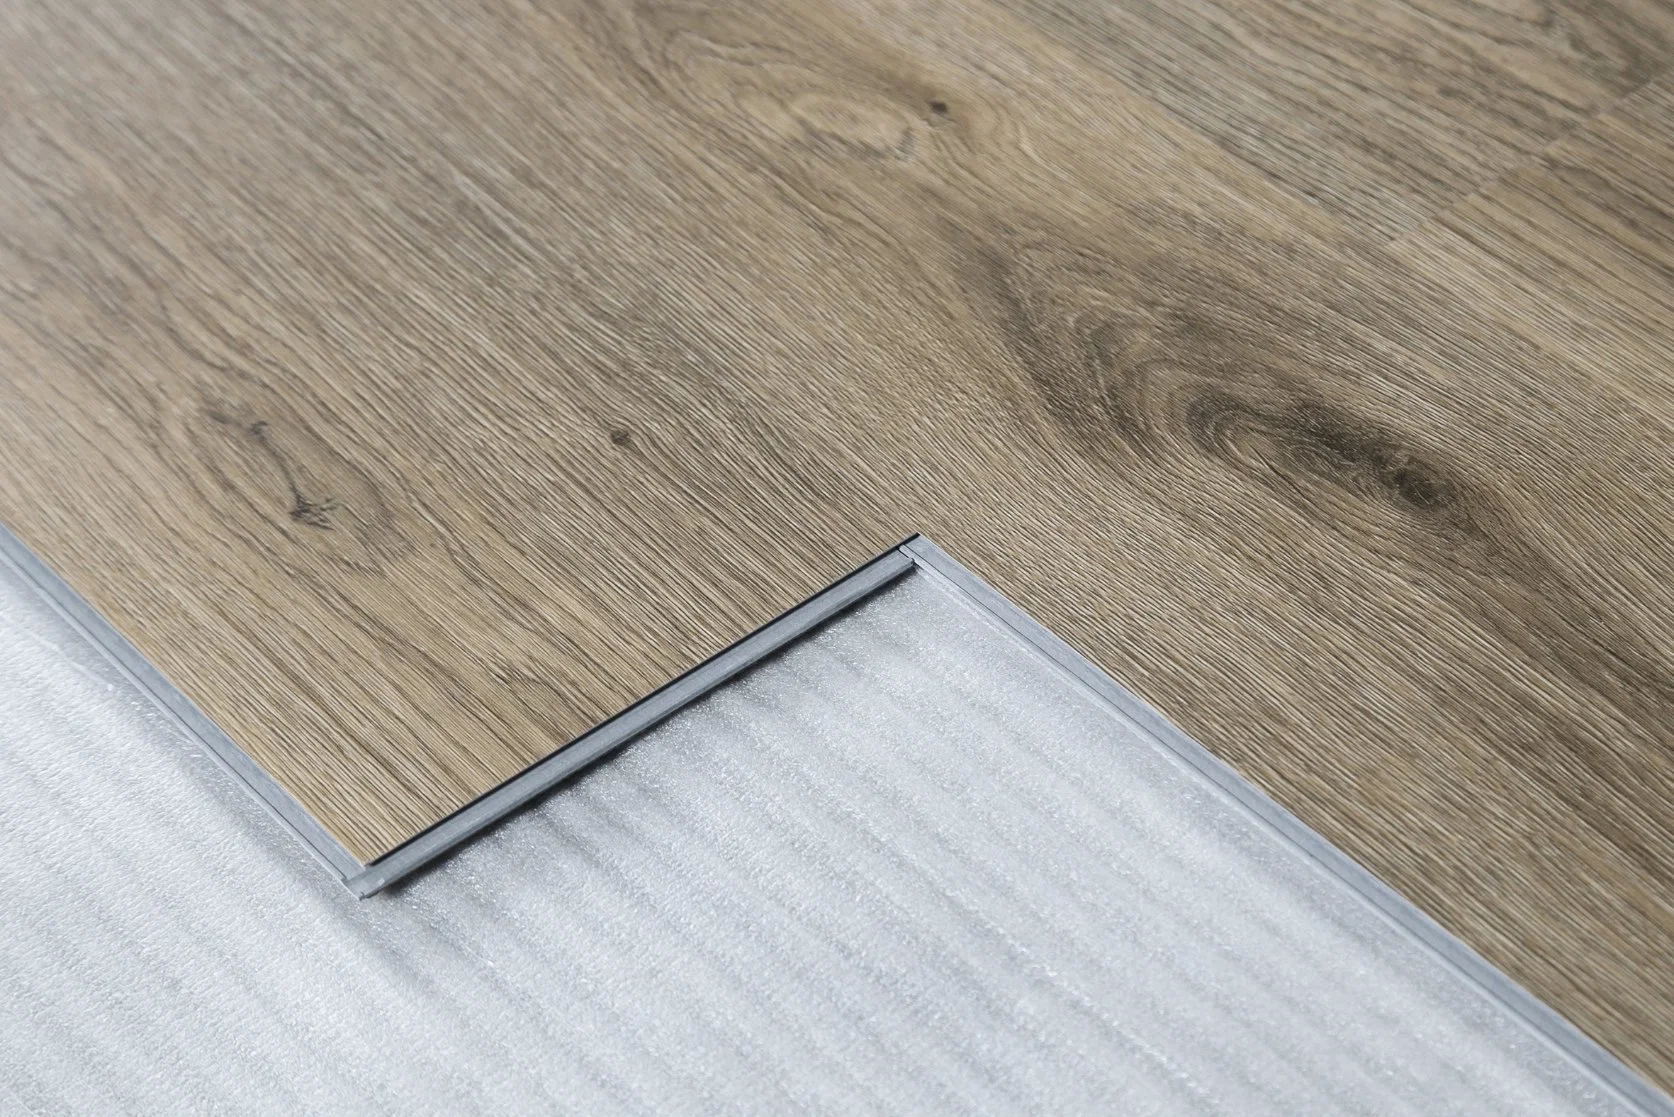 Stone Plastic Composite Self Adhesive Plank Vinyl Wood Style Plastic PVC Floor Flooring with Competitive Price Quality